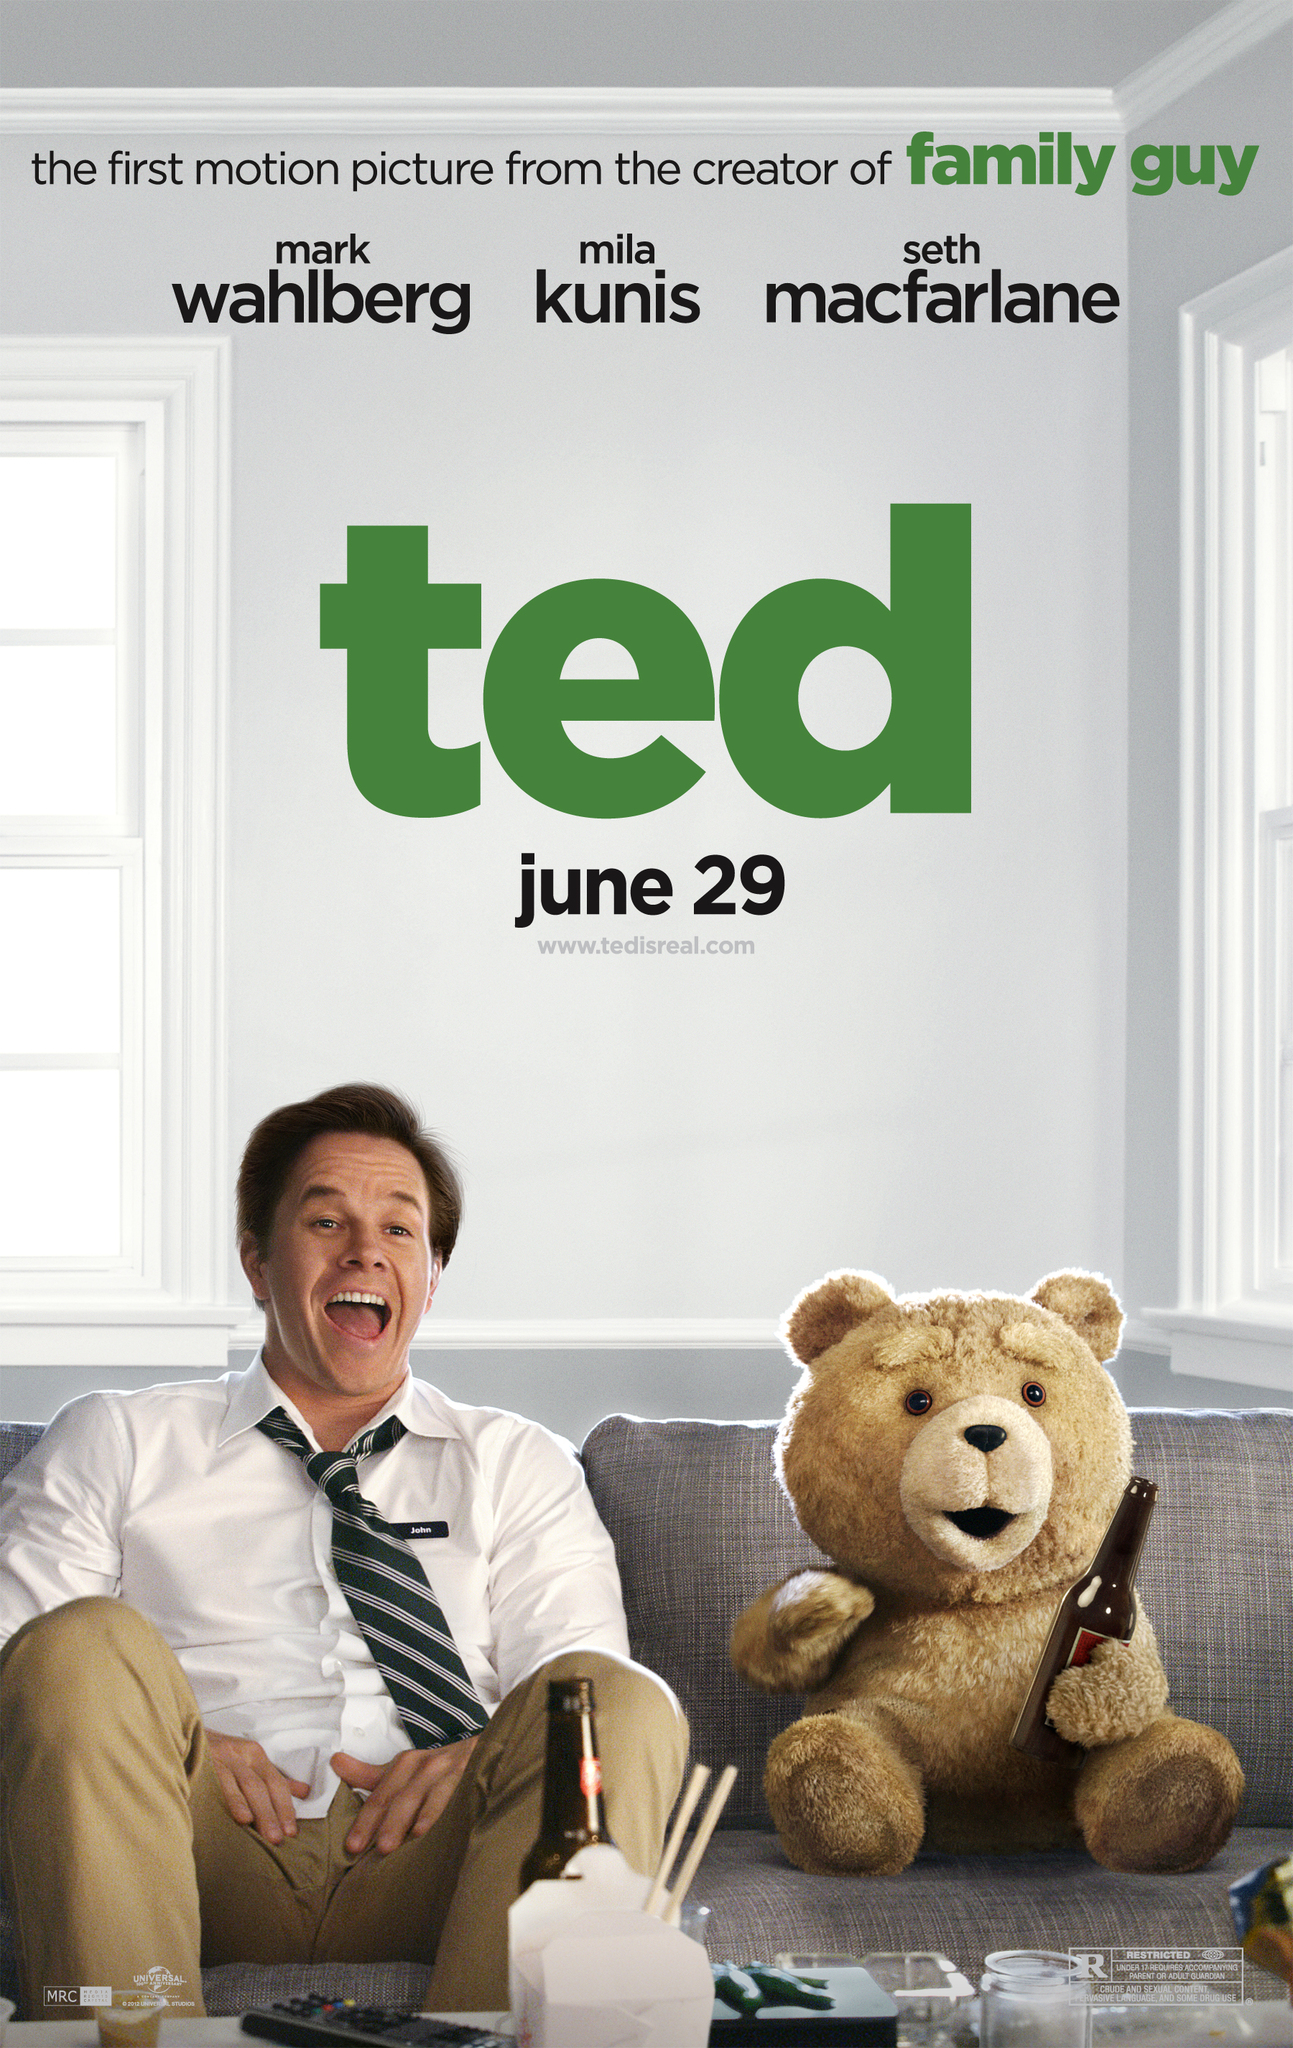 Chú Gấu Ted - Ted